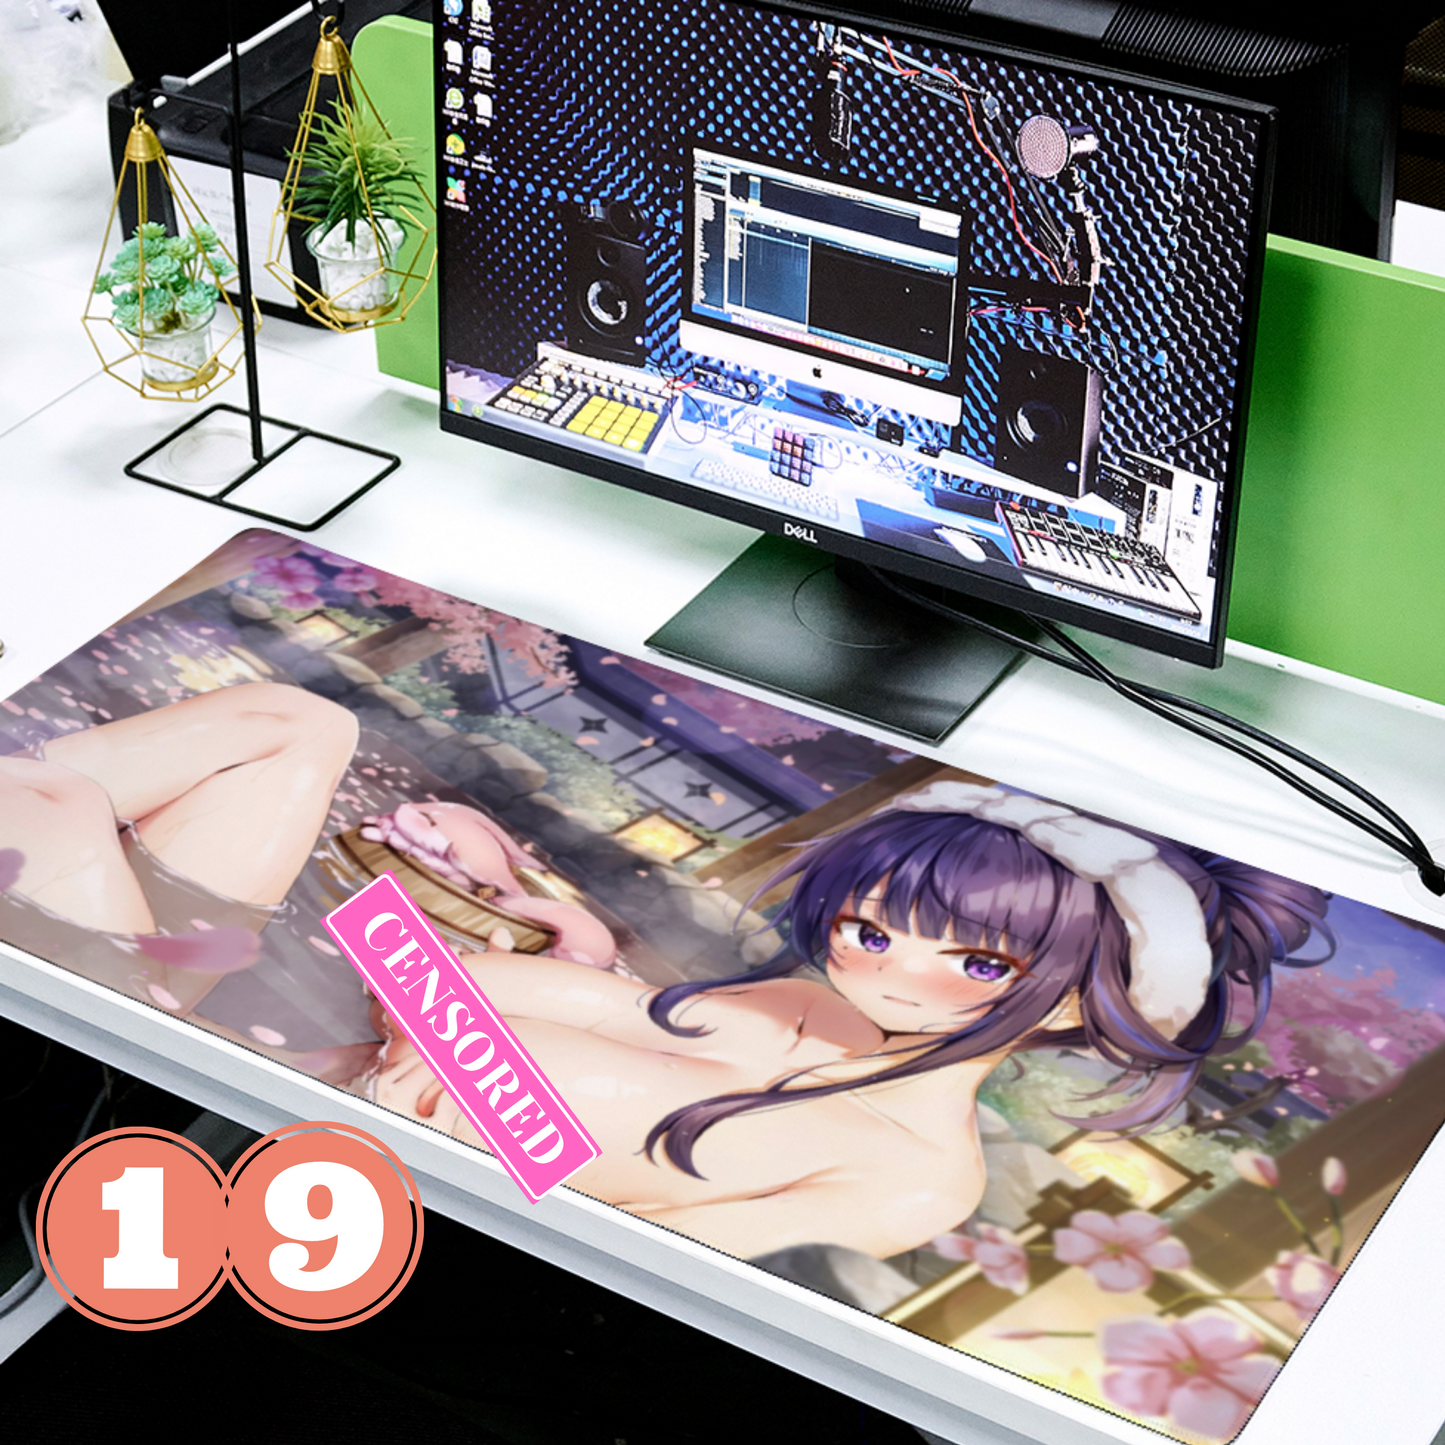 Anime sexy mousepads /Desk mats | Large Ecchi Sexy mousepads for computer | NSFW mousepads for gamers